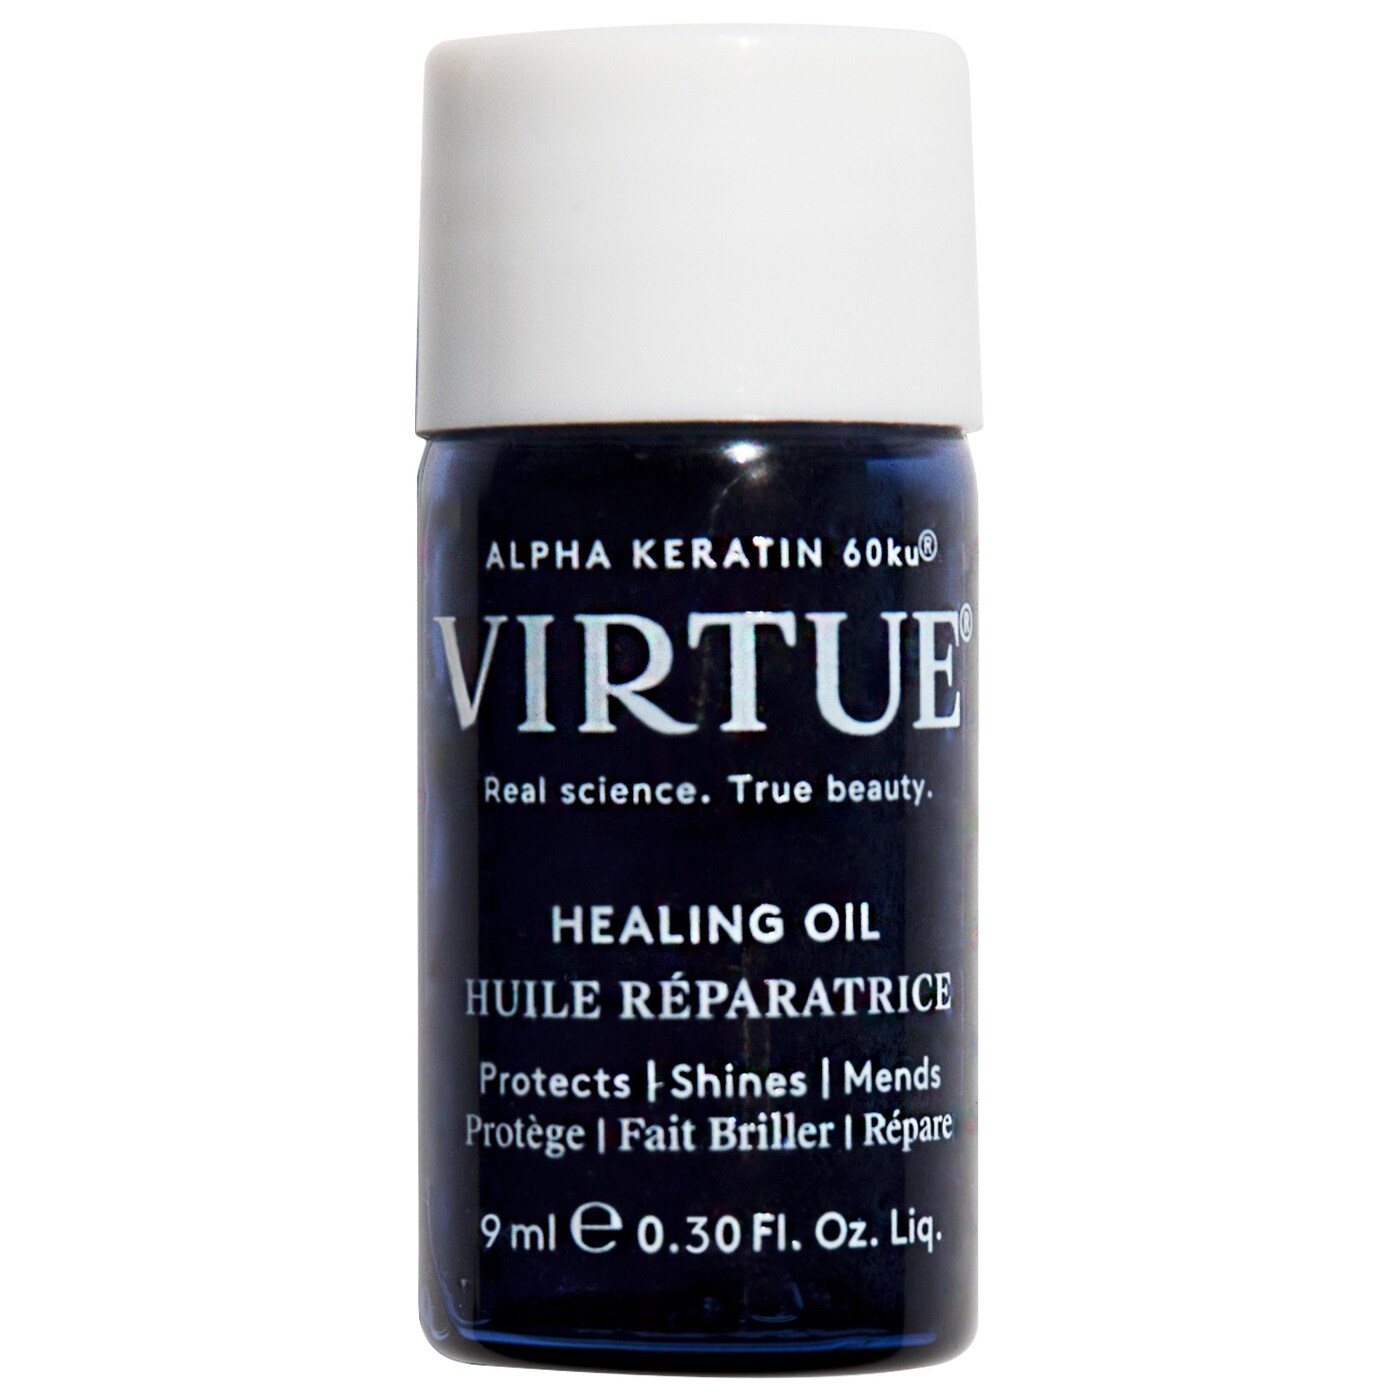 Virtue Healing Oil 9ml